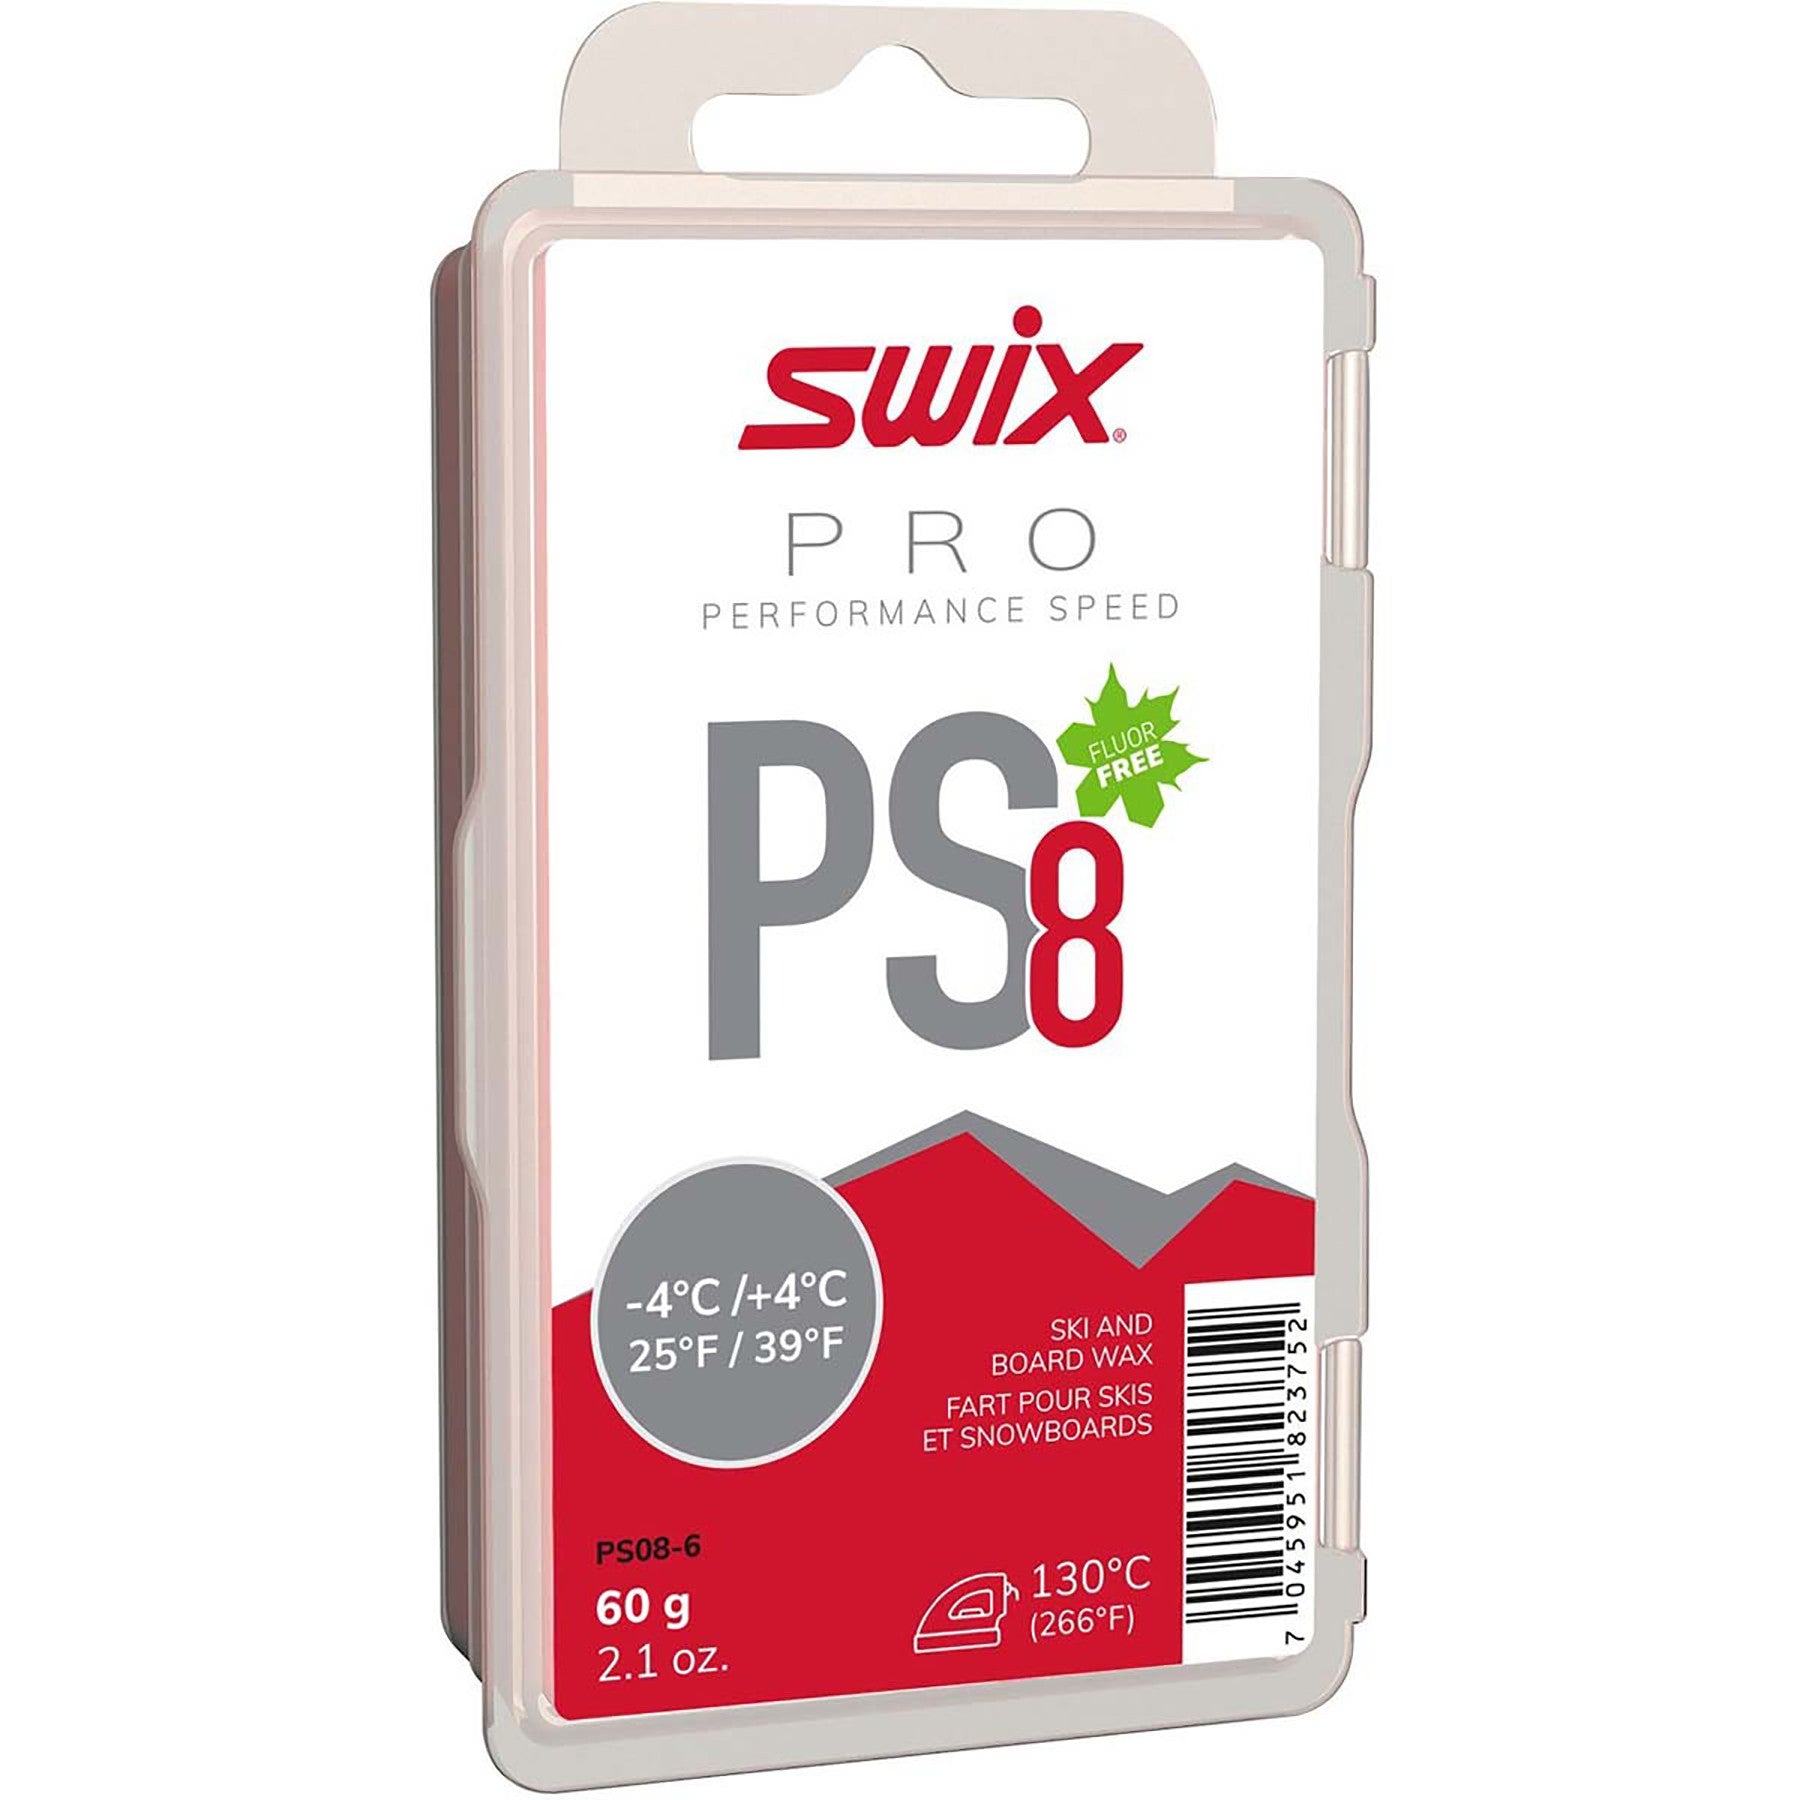 Swix PS Performance Speed Glide Wax 60g - 0